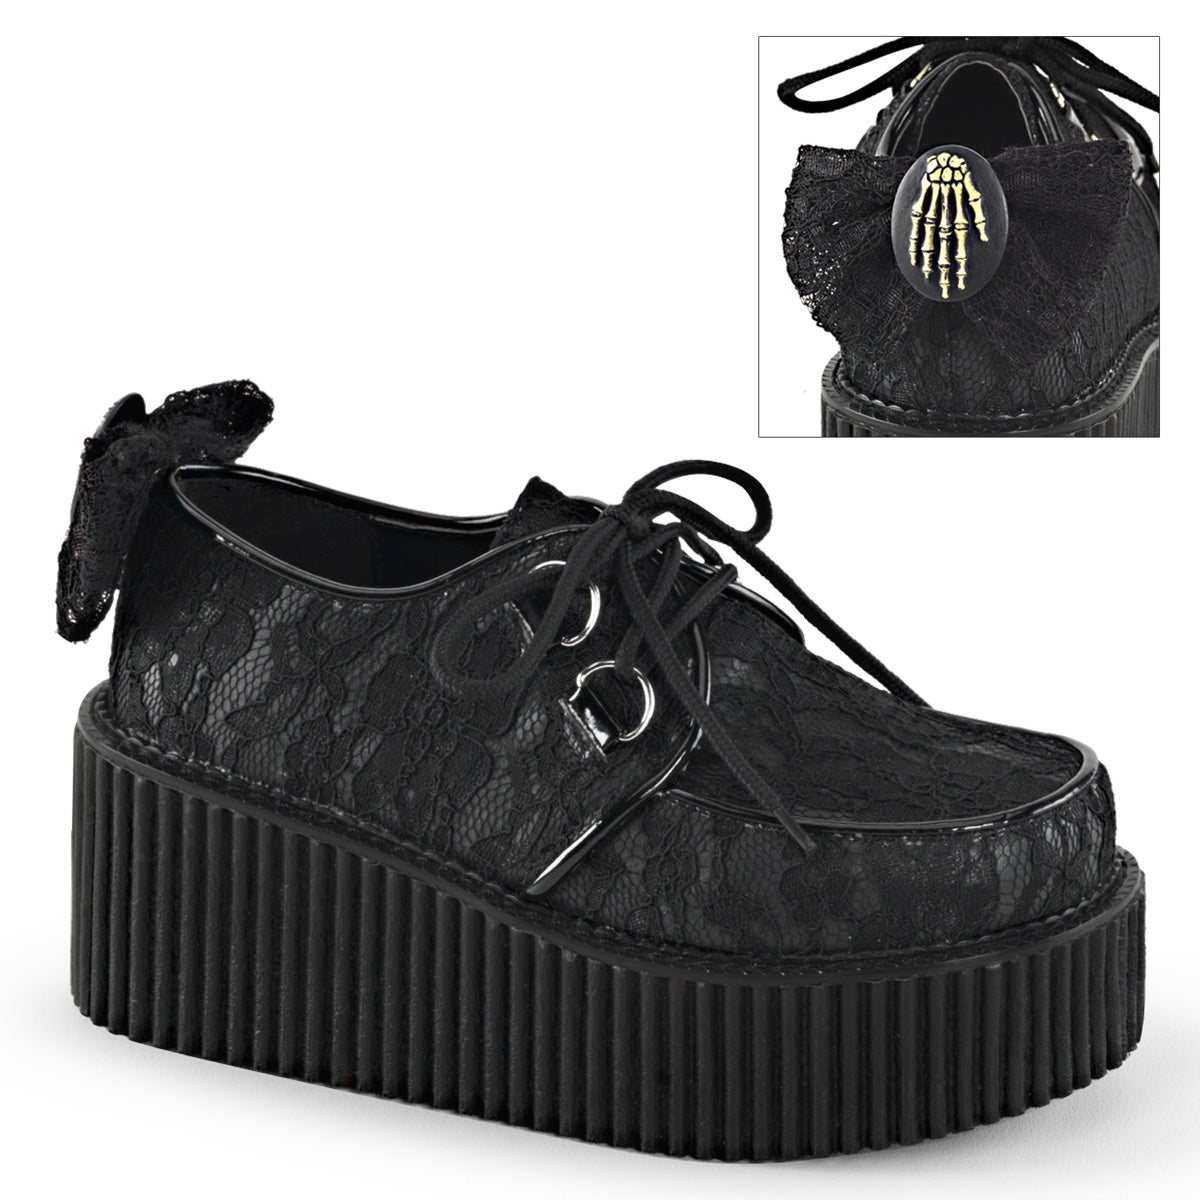 DEMONIA Creeper-212 Creepers - Black Vegan Leather-Lace